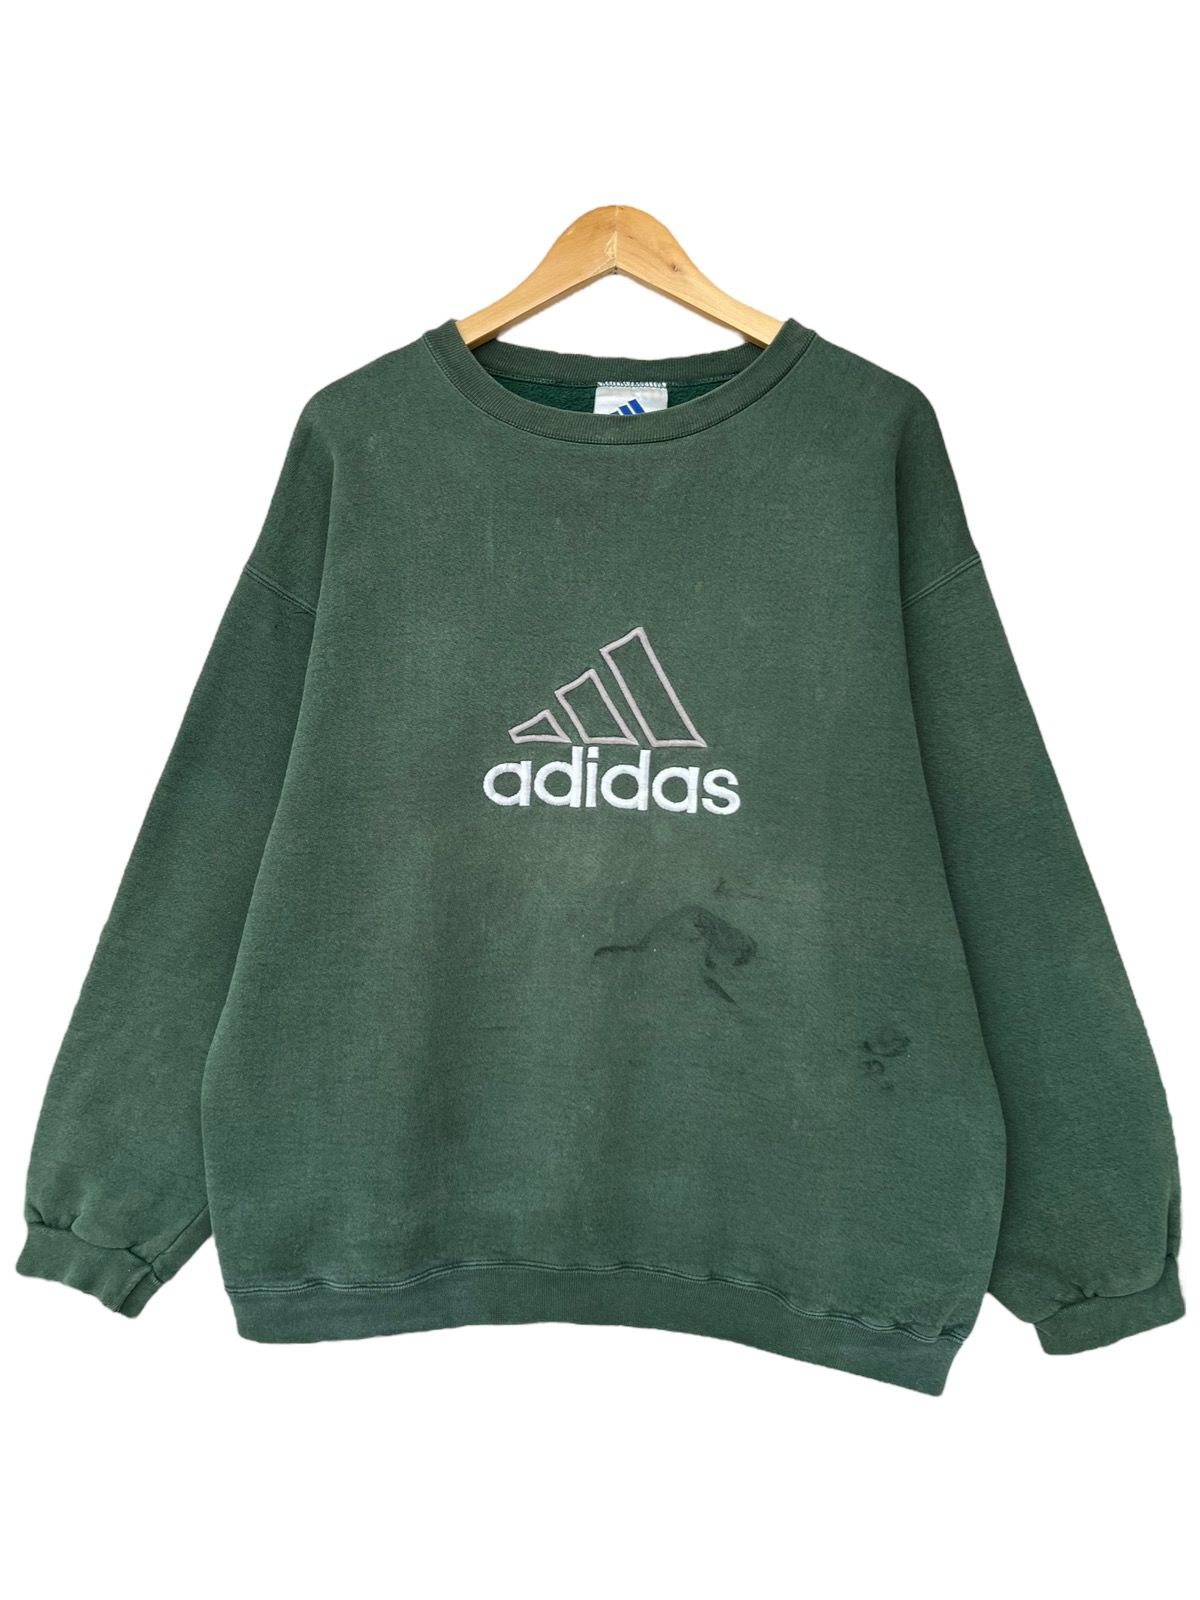 Vintage 90s Adidas Trefoil Biglogo Green Baggy Sweatshirt - 1